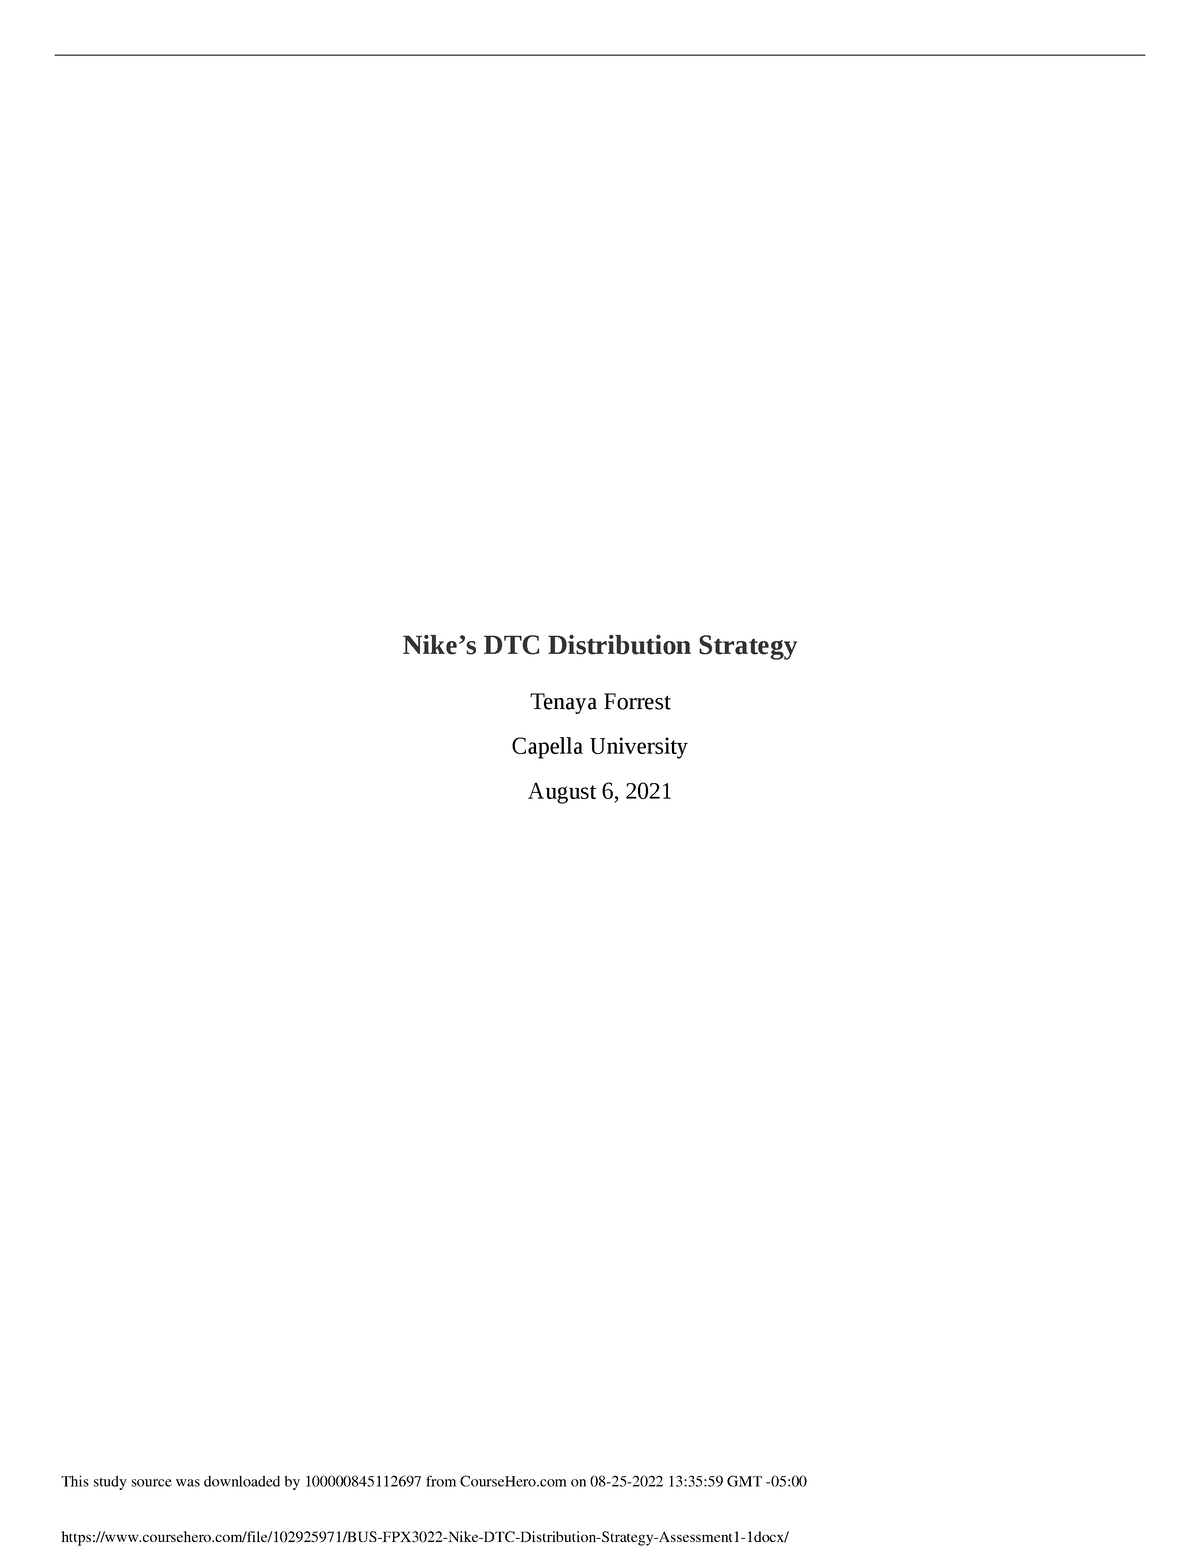 BUS Nike DTC Strategy Assessment 1 - Nike's DTC Distribution Strategy - Studocu